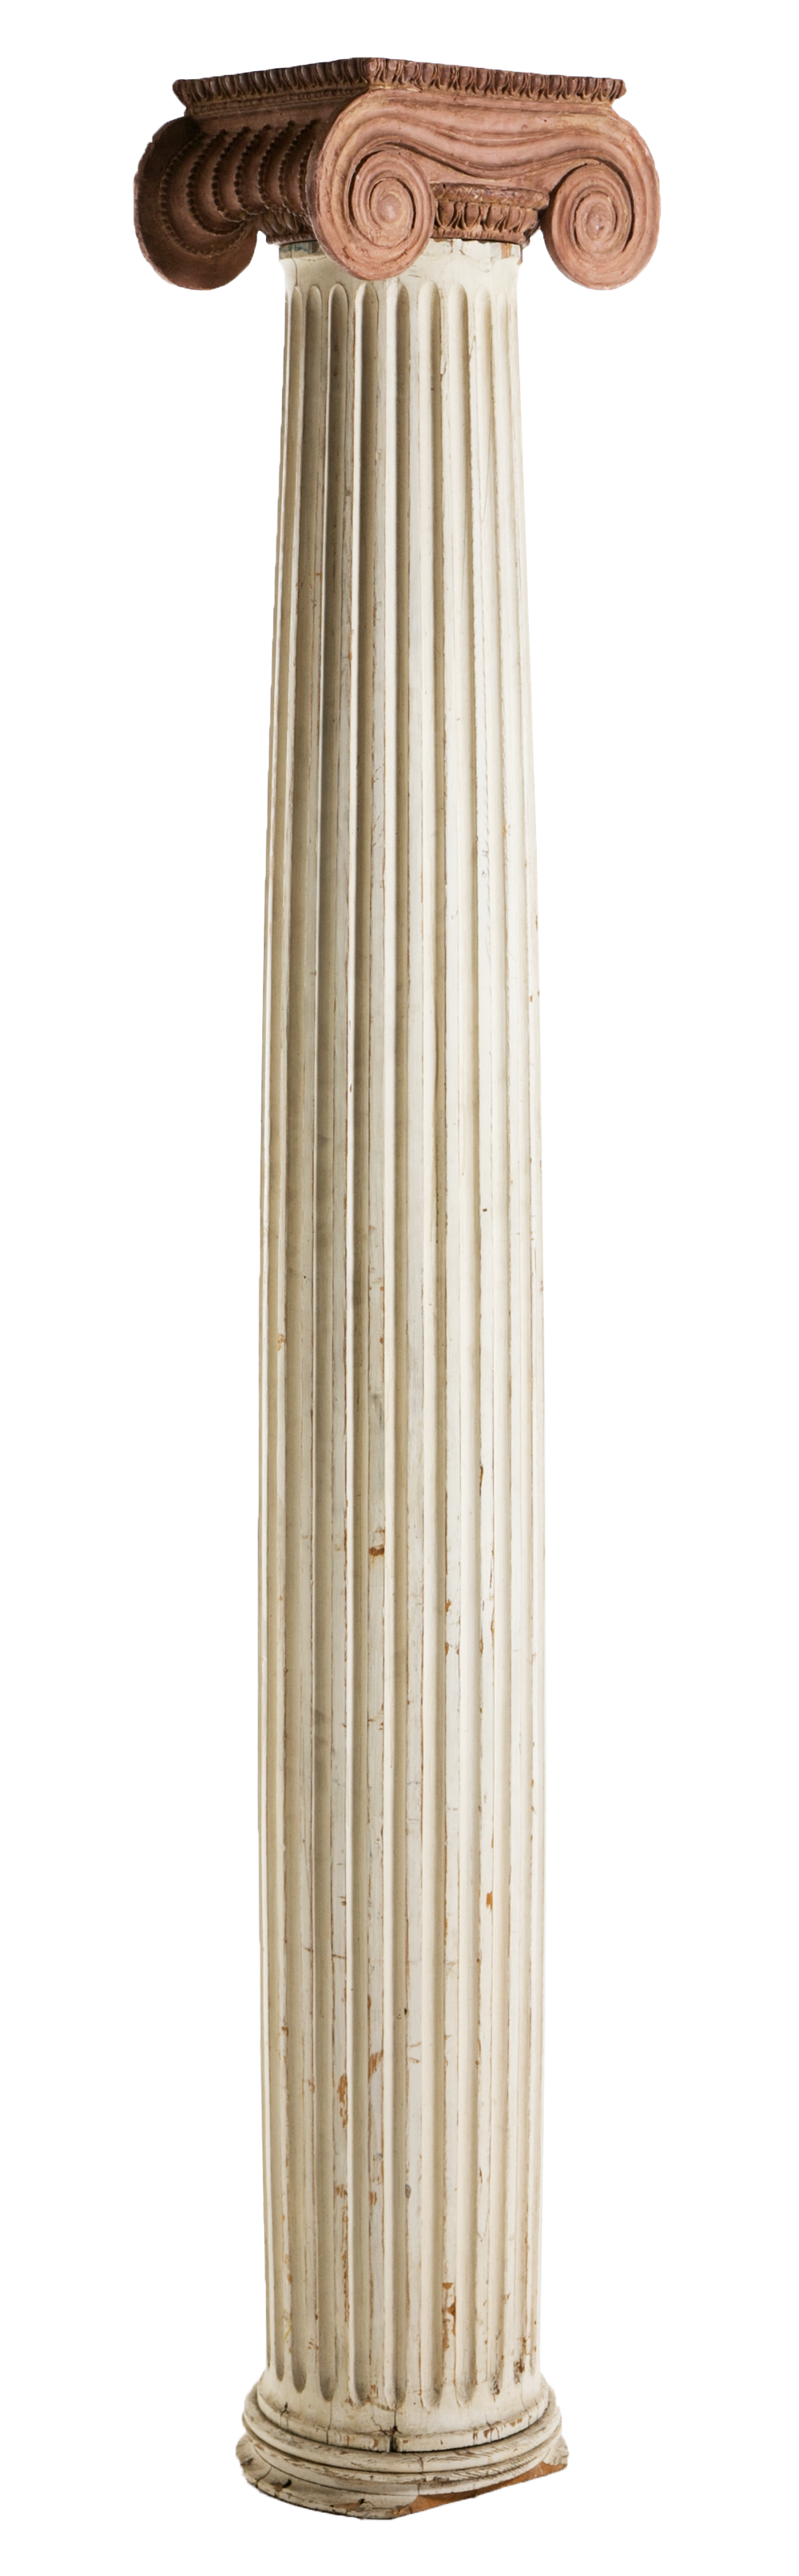 Column PNG Image File